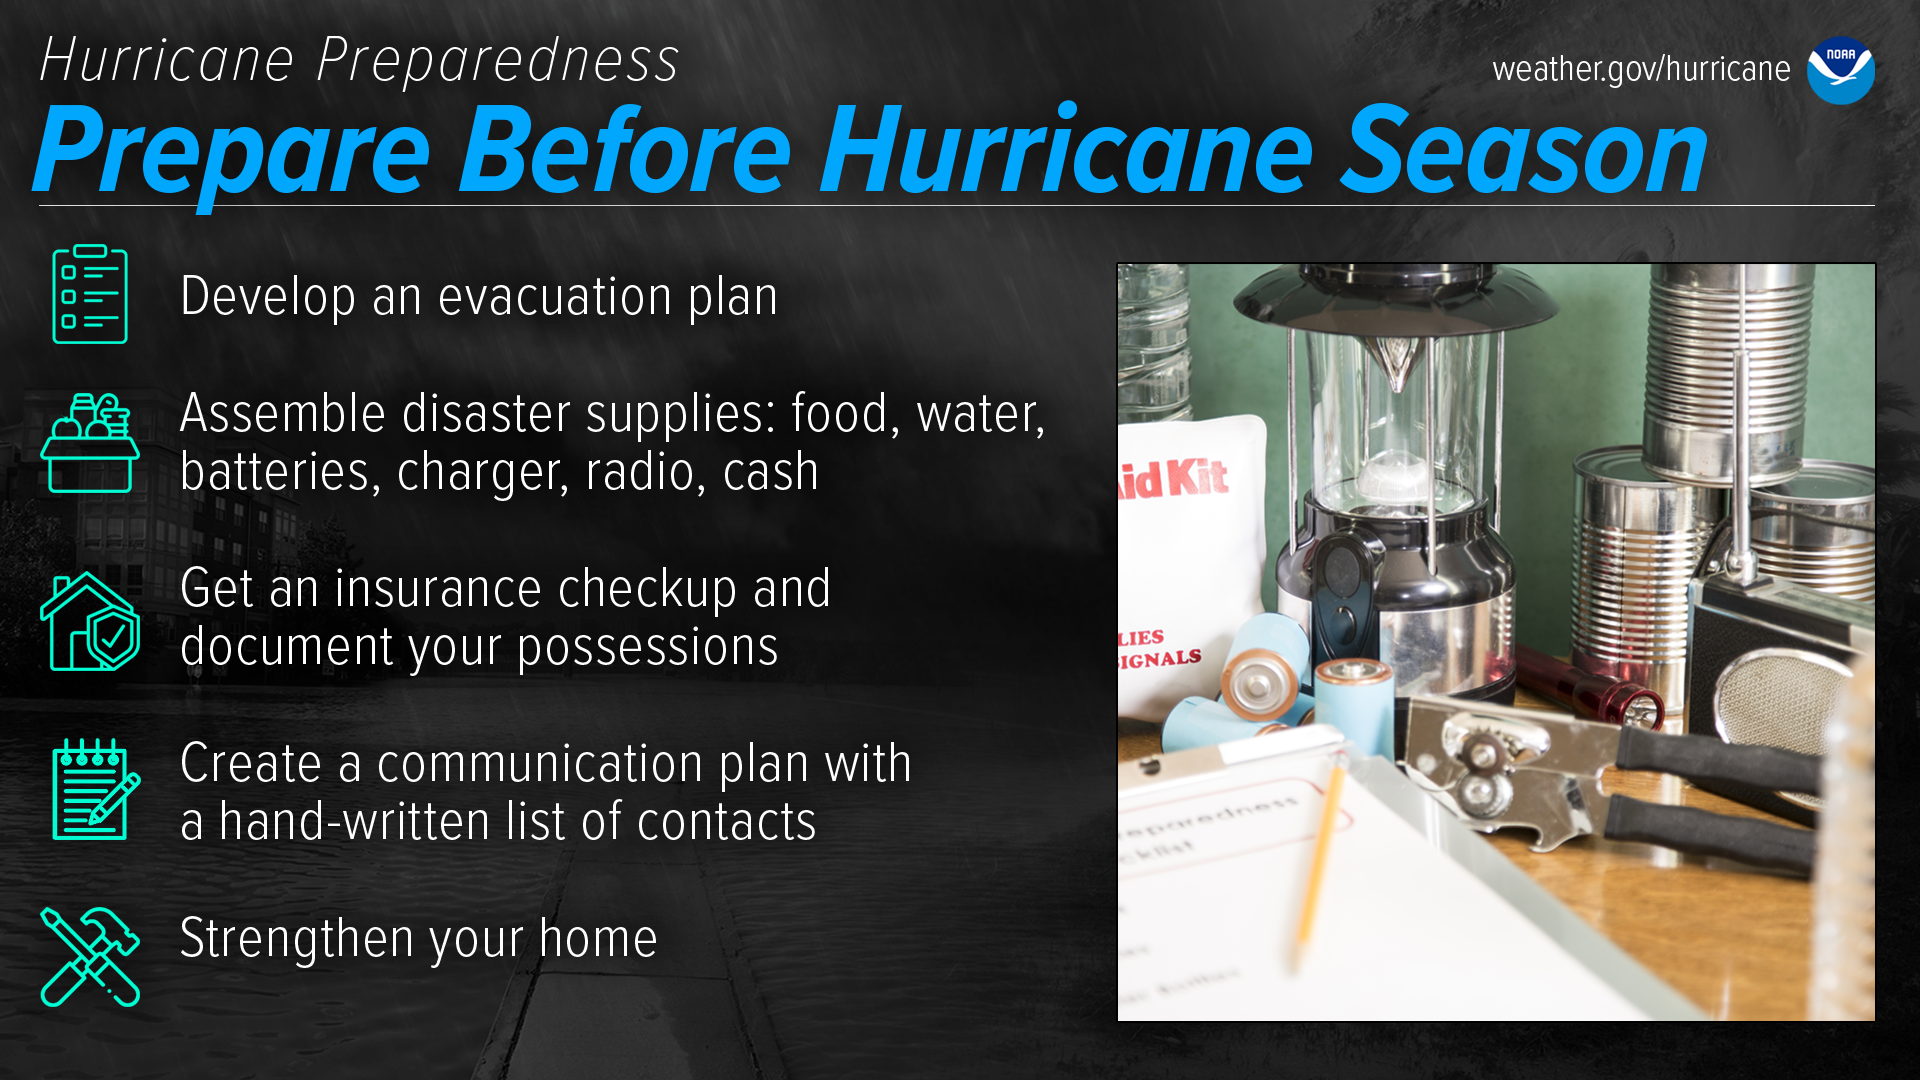 Plan for storm emergencies